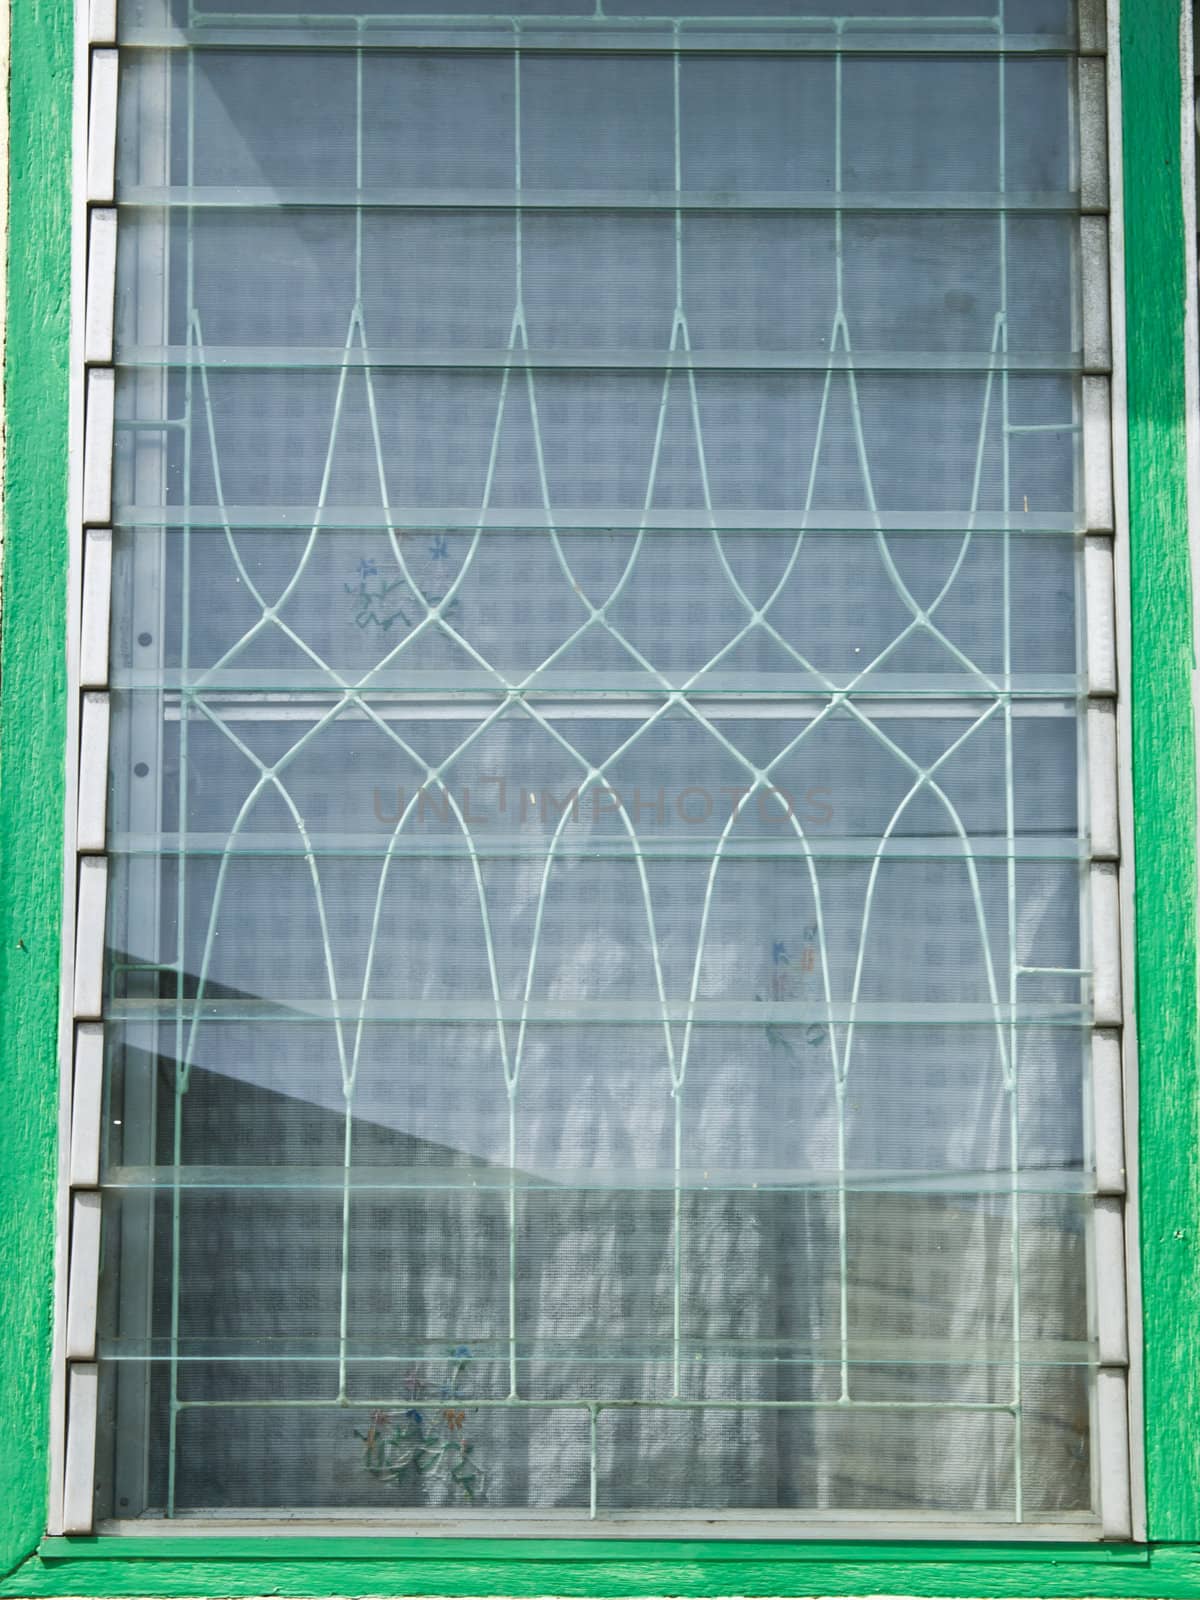 A closed glass lourve window